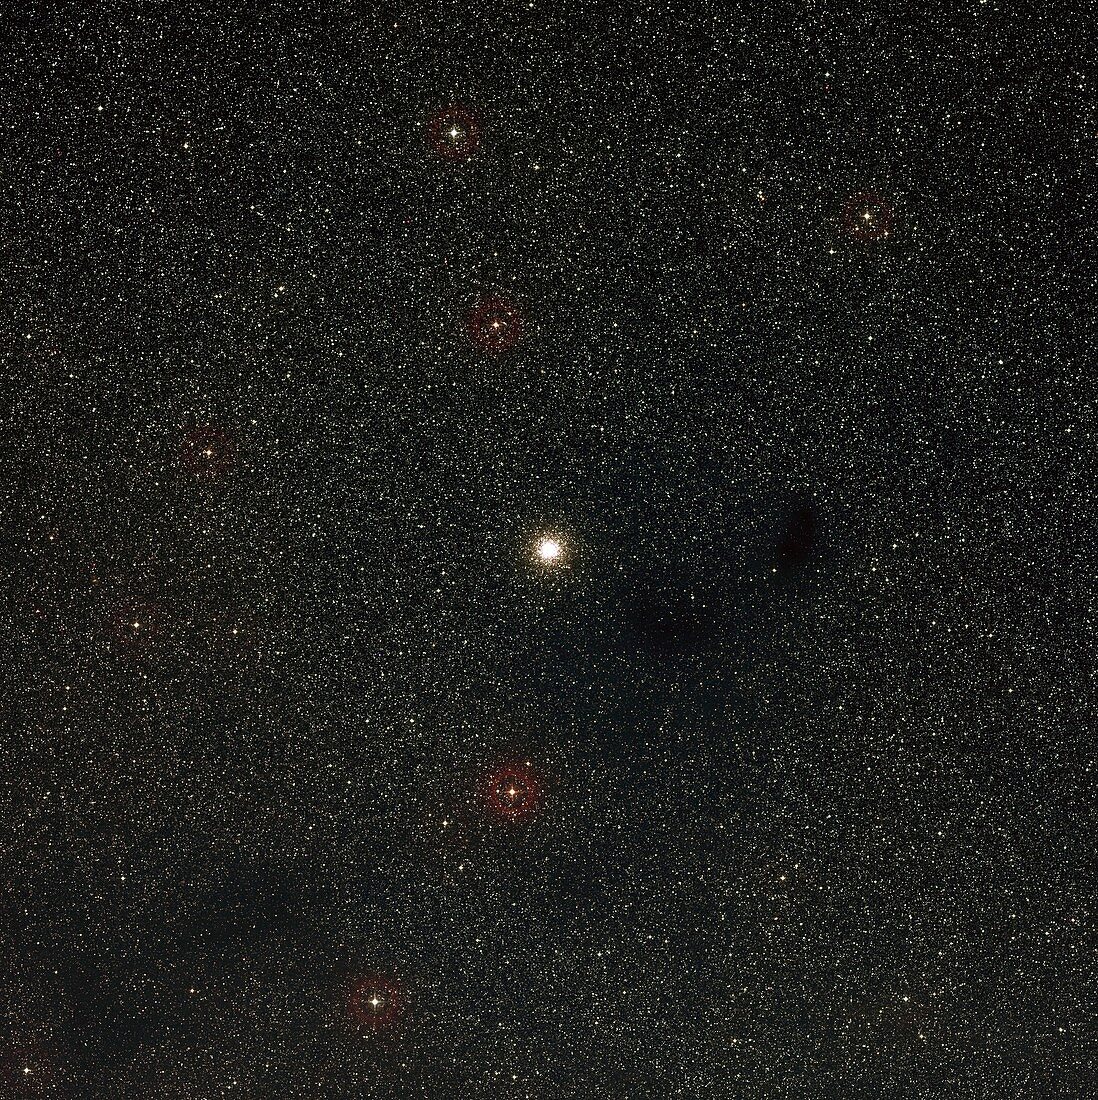 Messier 9 globular star cluster,Hubble image